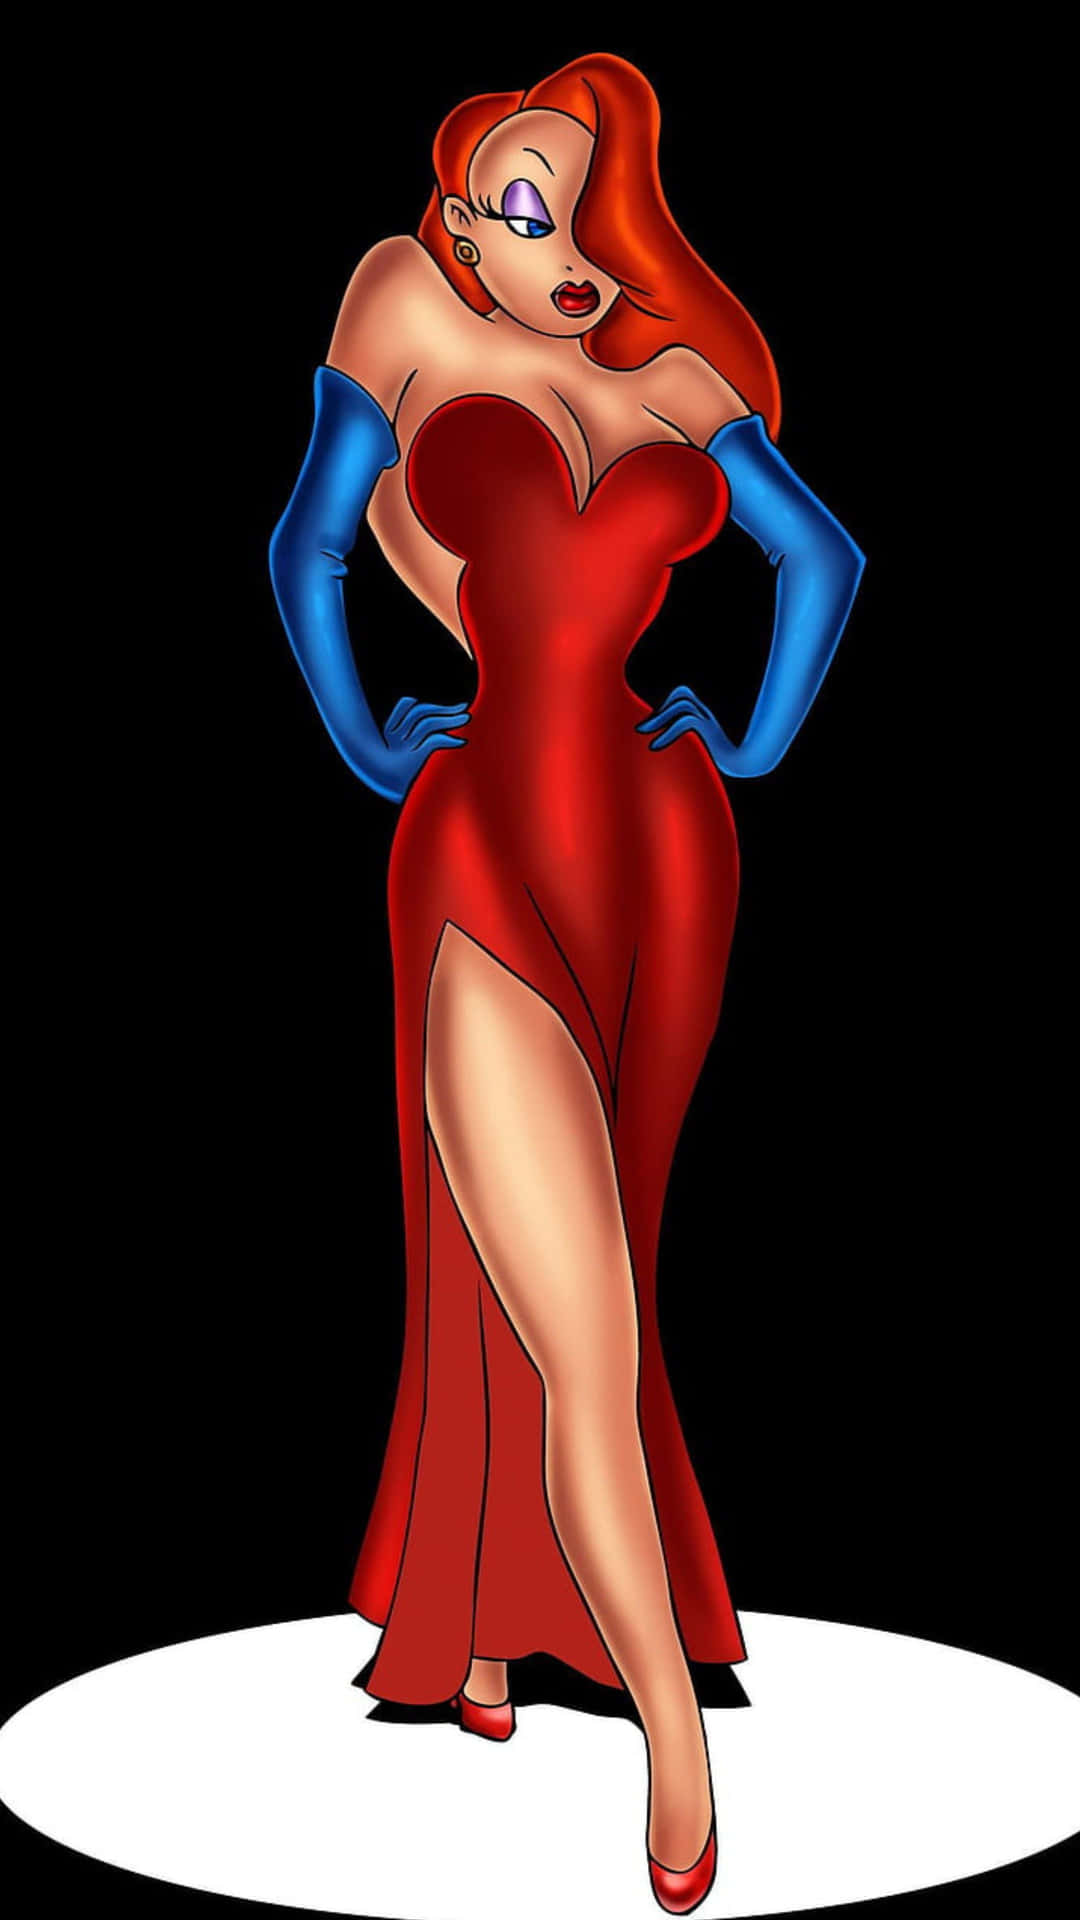 Jessica Rabbit Iconic Red Dress